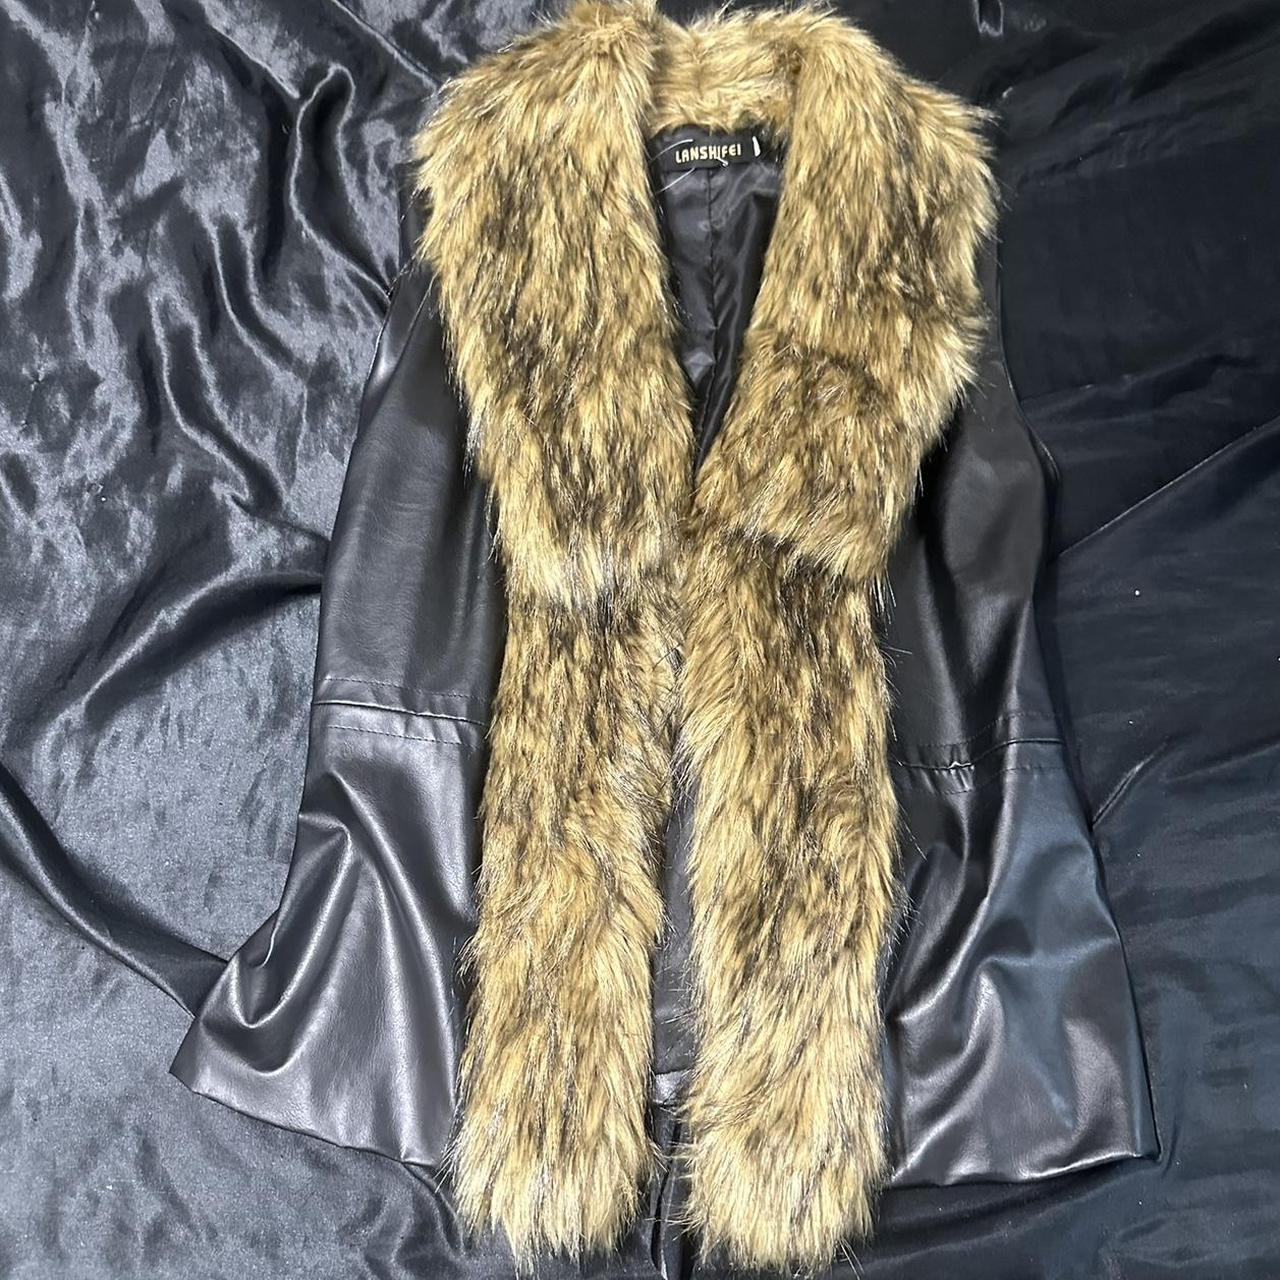 Lanshifei leather vest with fur lining send me... - Depop